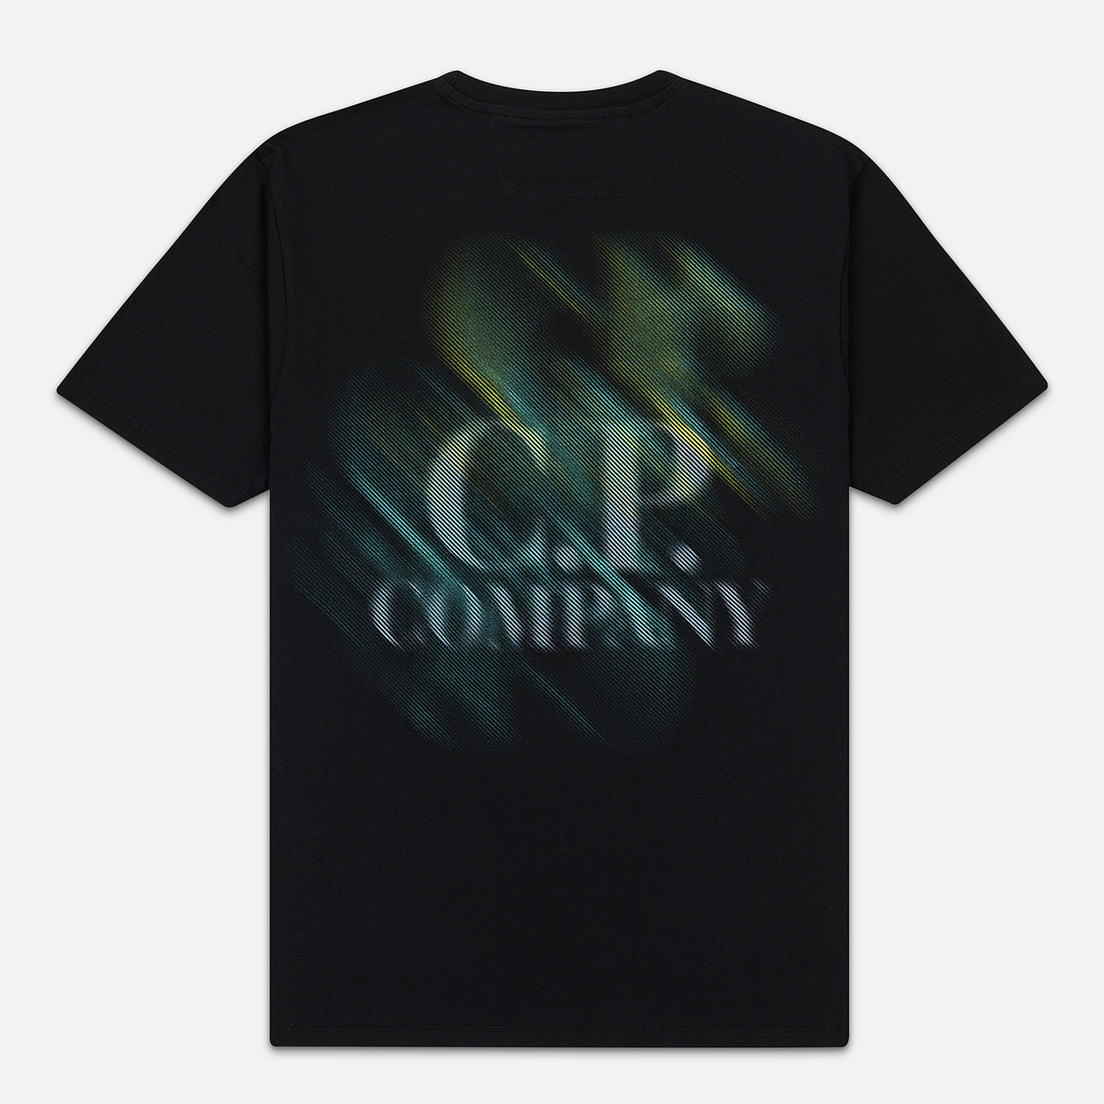 C.P. Company Мужская футболка Blurred Graphic Logo